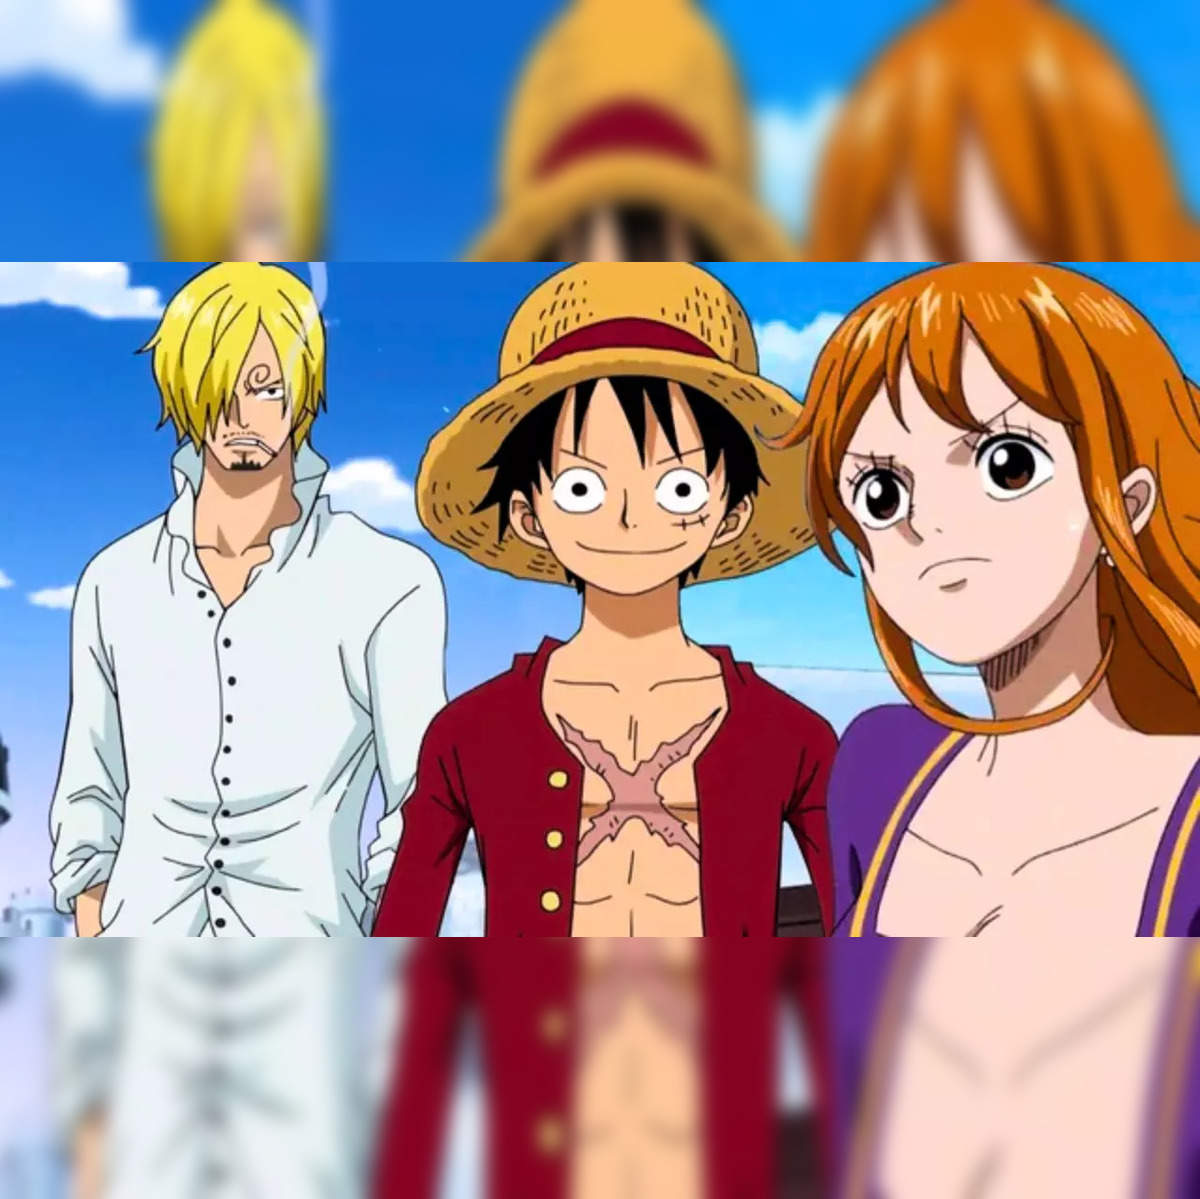 one piece episode 1084 release date: One Piece Episode 1084